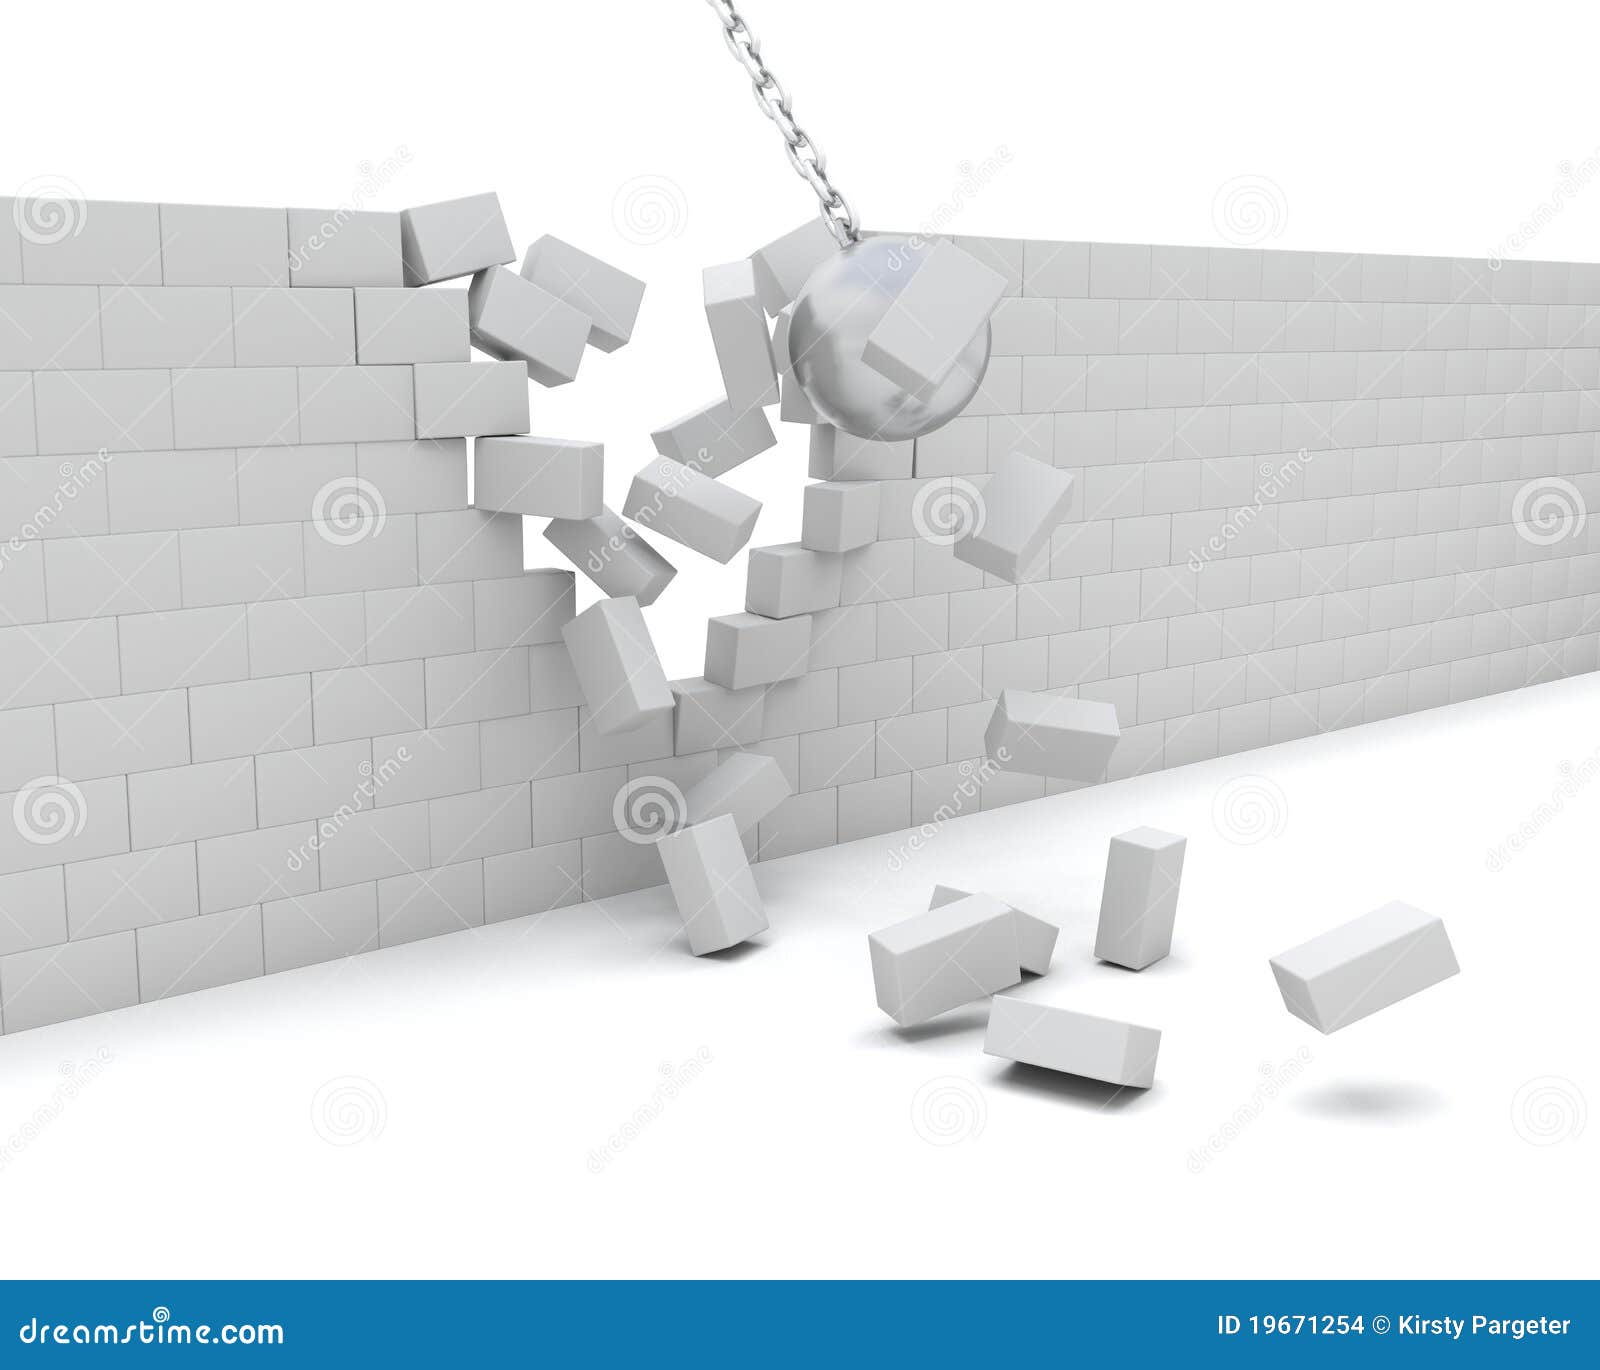 wrecking ball demolishing a wall